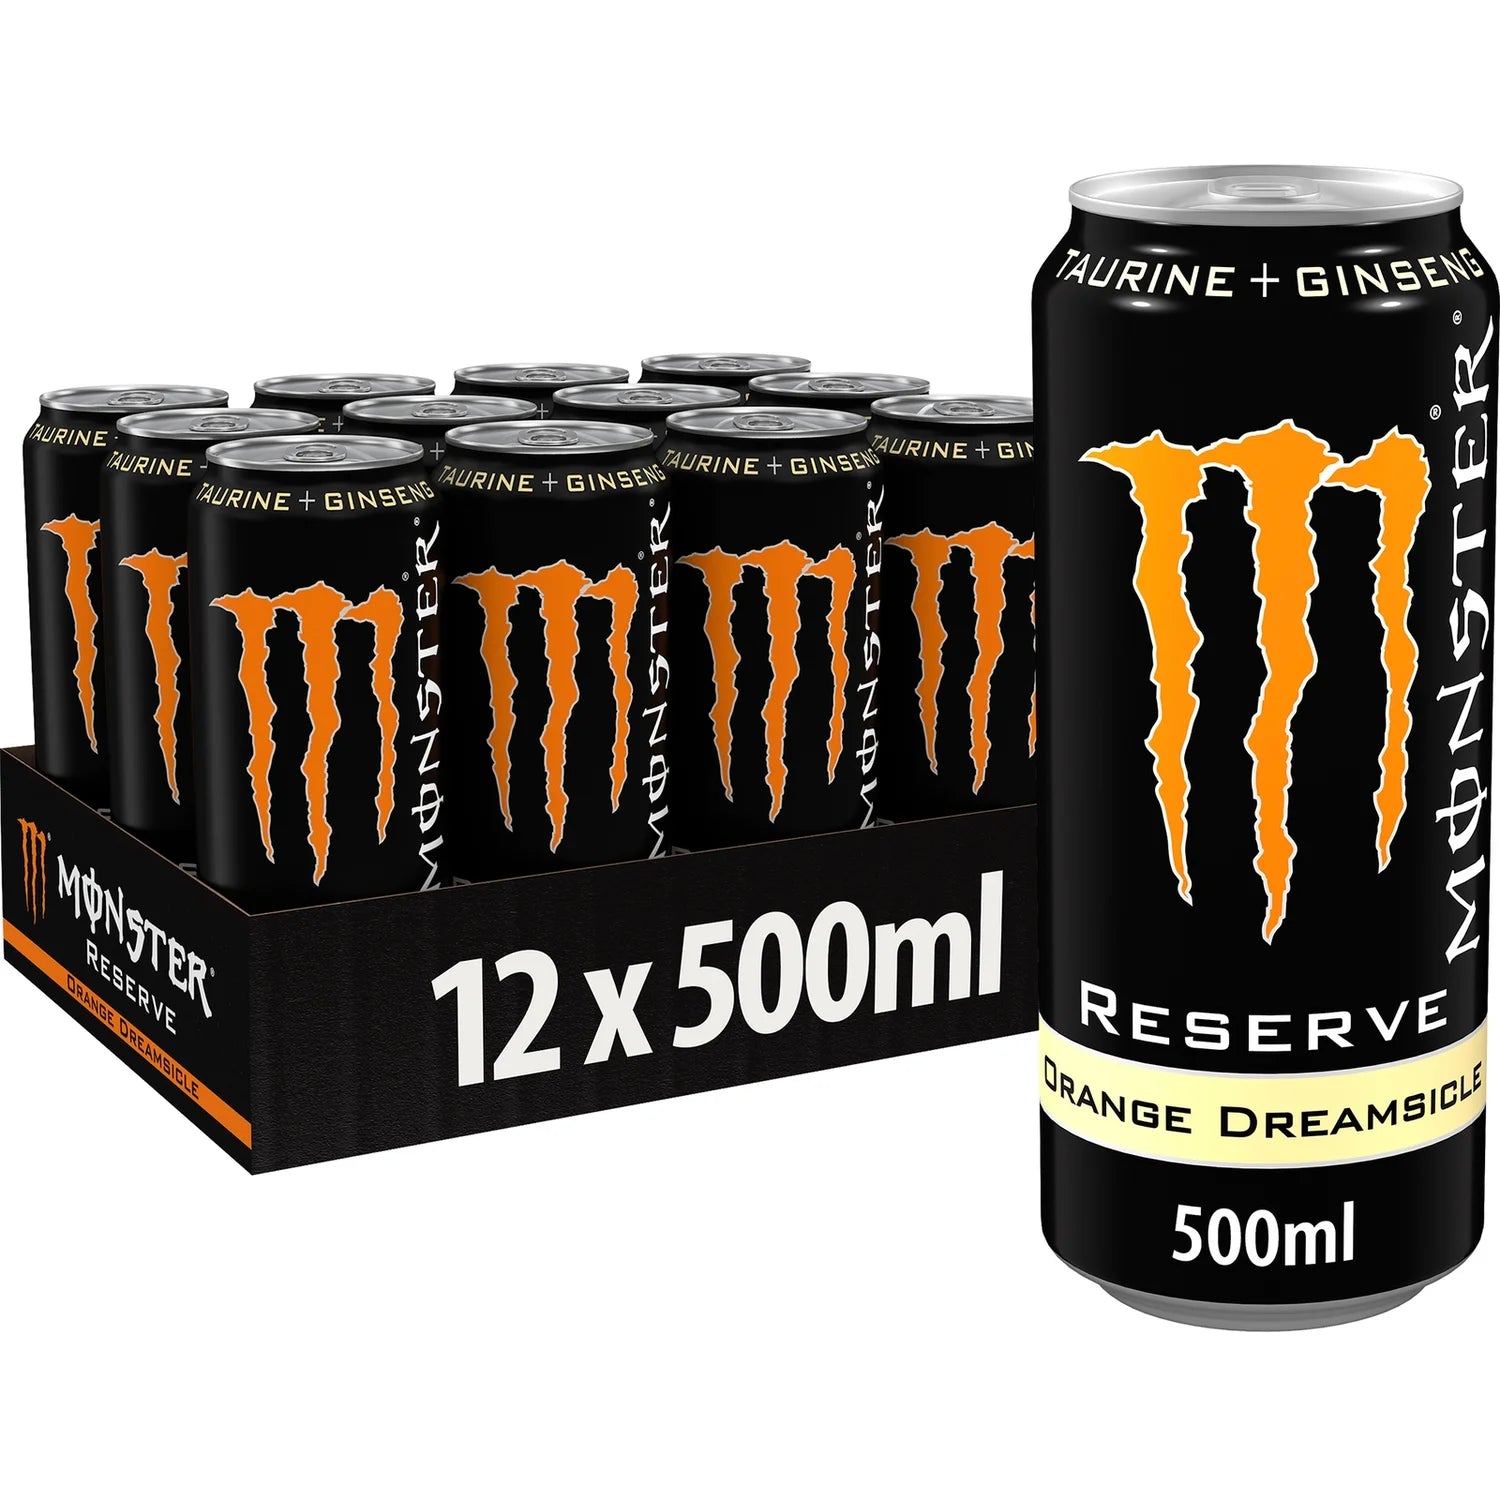 Monster Energy Drink Reserve Orange Dreamsicle - 500ml - Case of 12